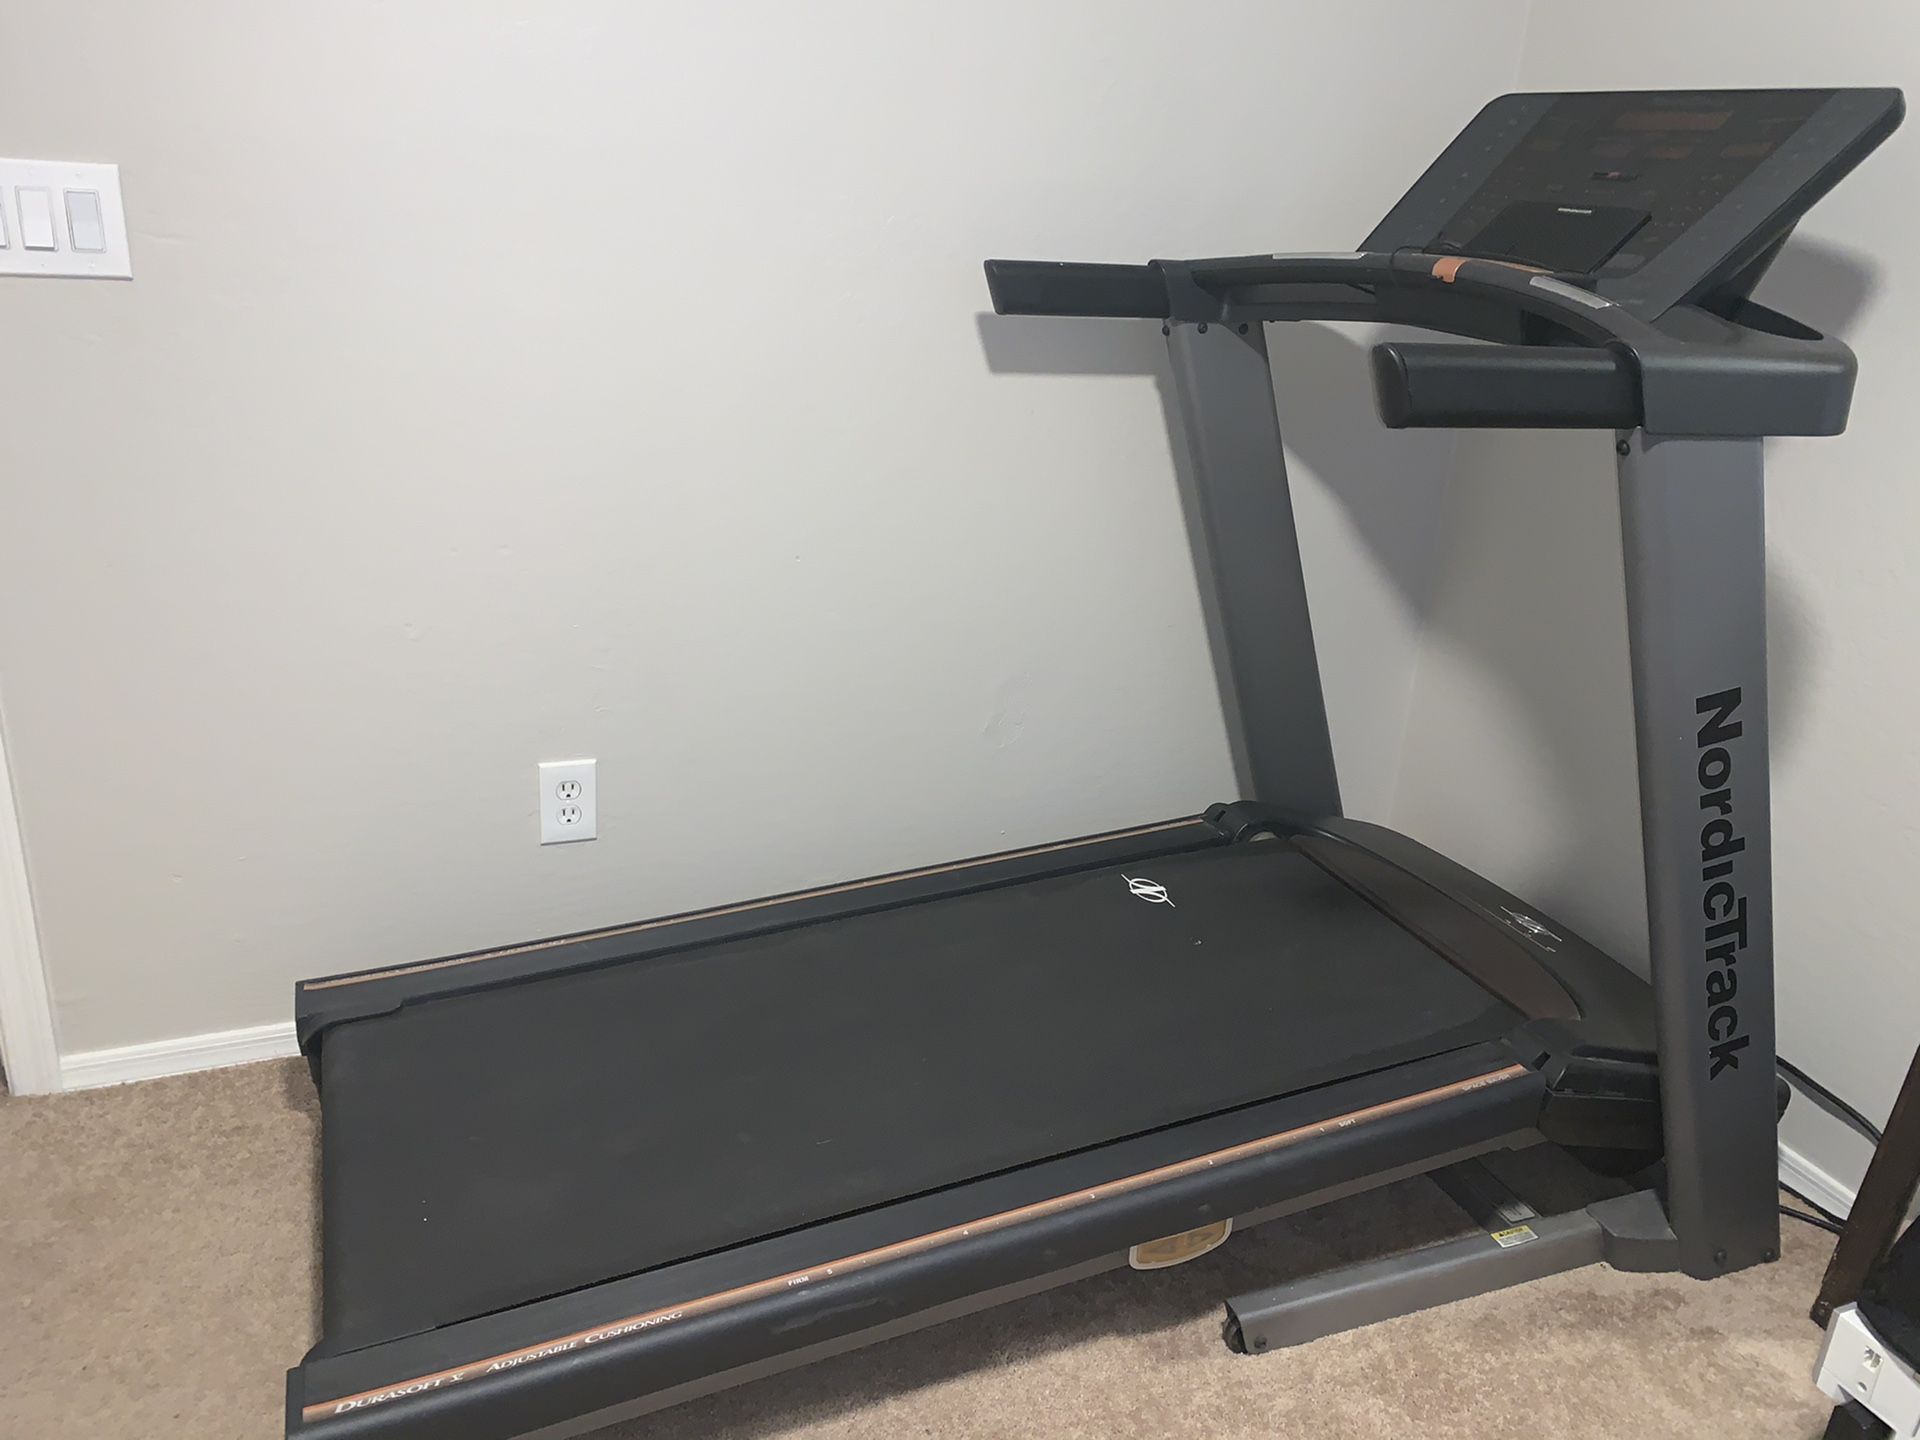 NordicTrack Treadmill $350